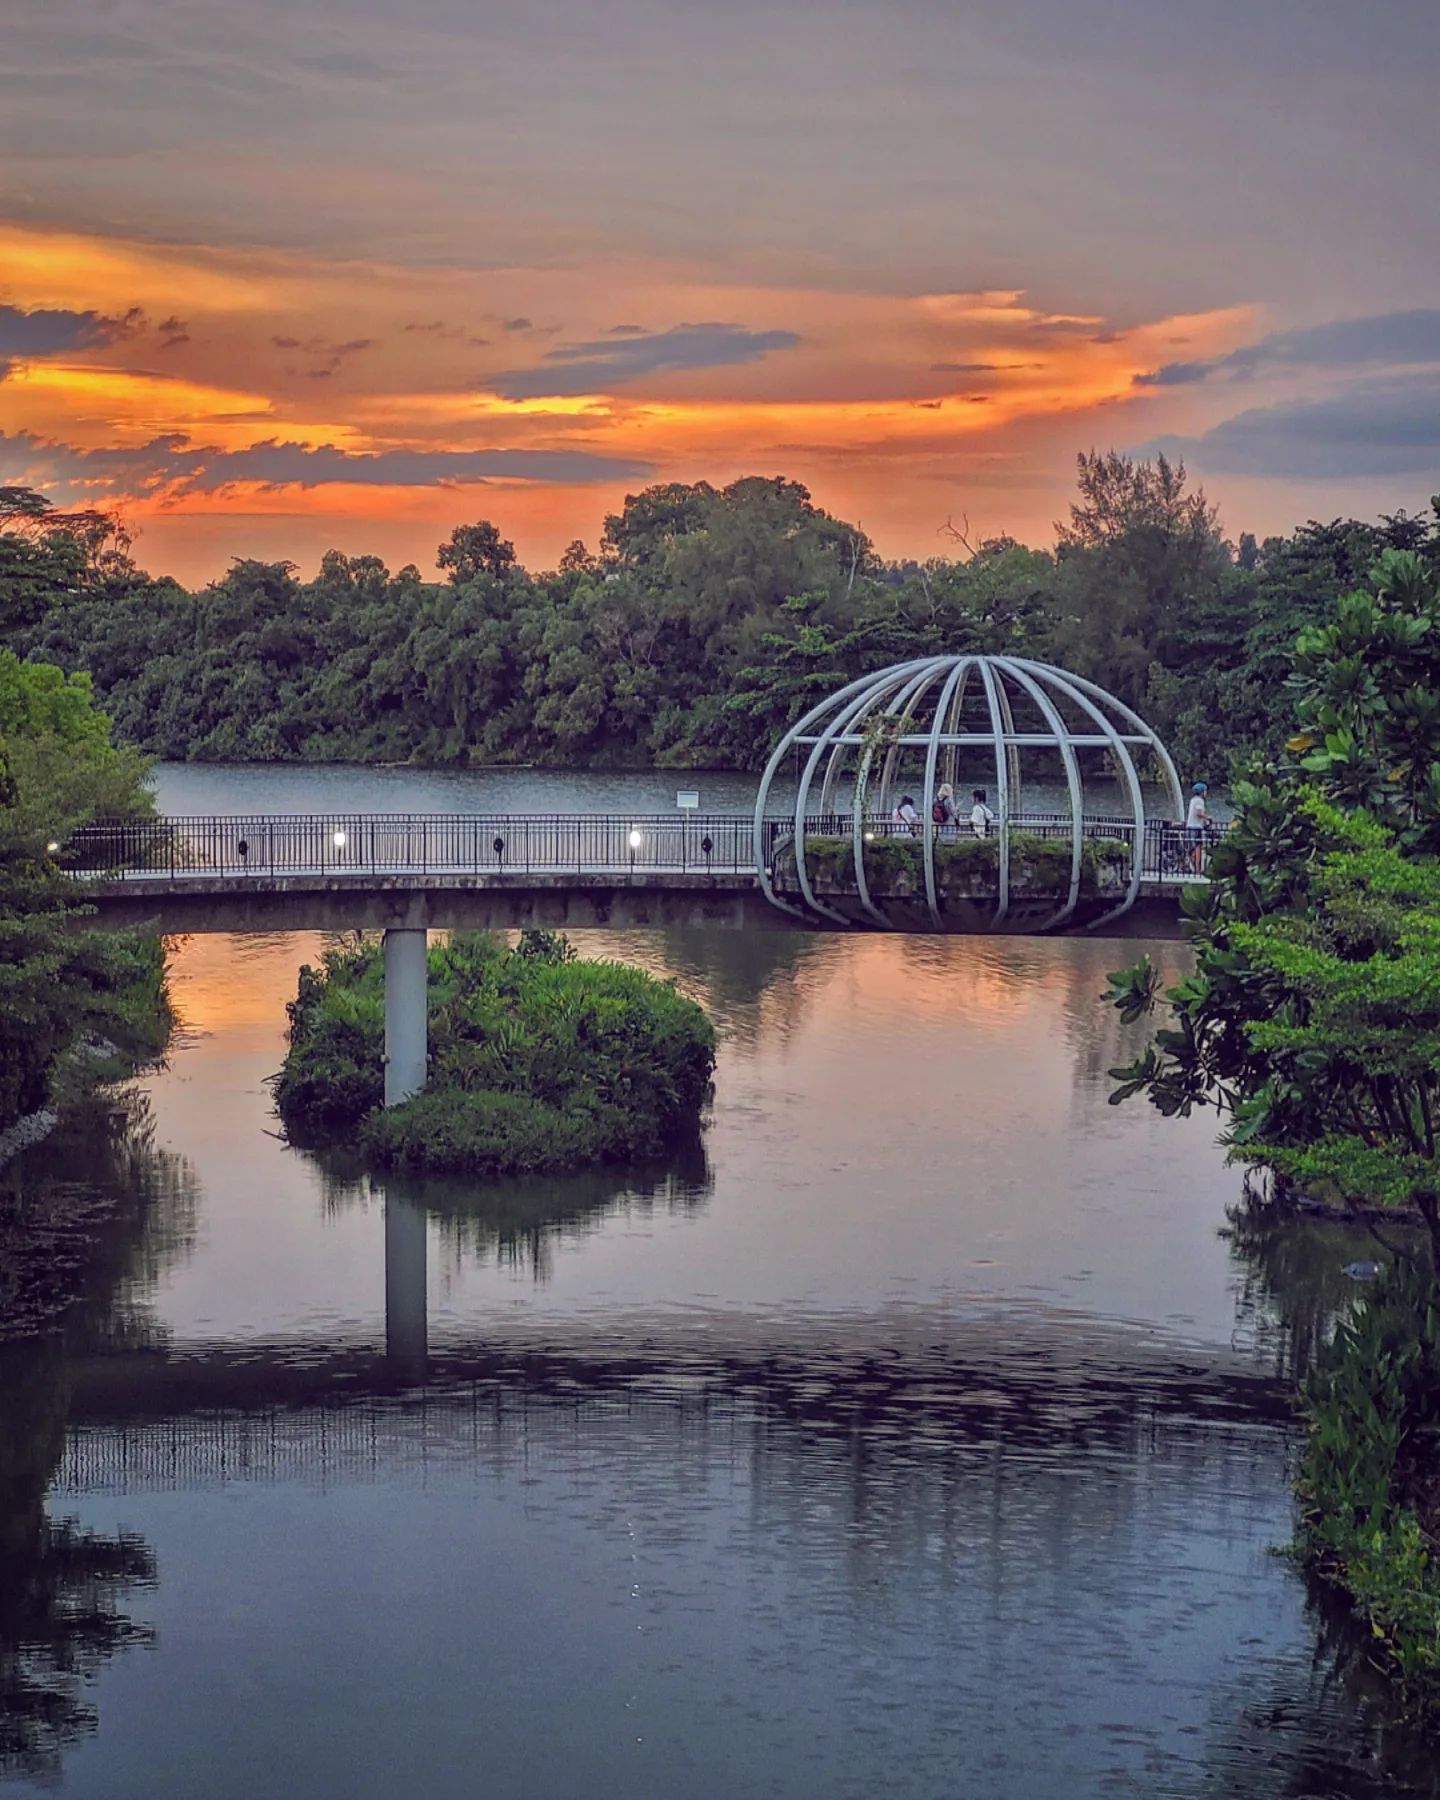 Sunrise & sunset spots in Singapore - Punggol Waterway Park Jewel Bridge